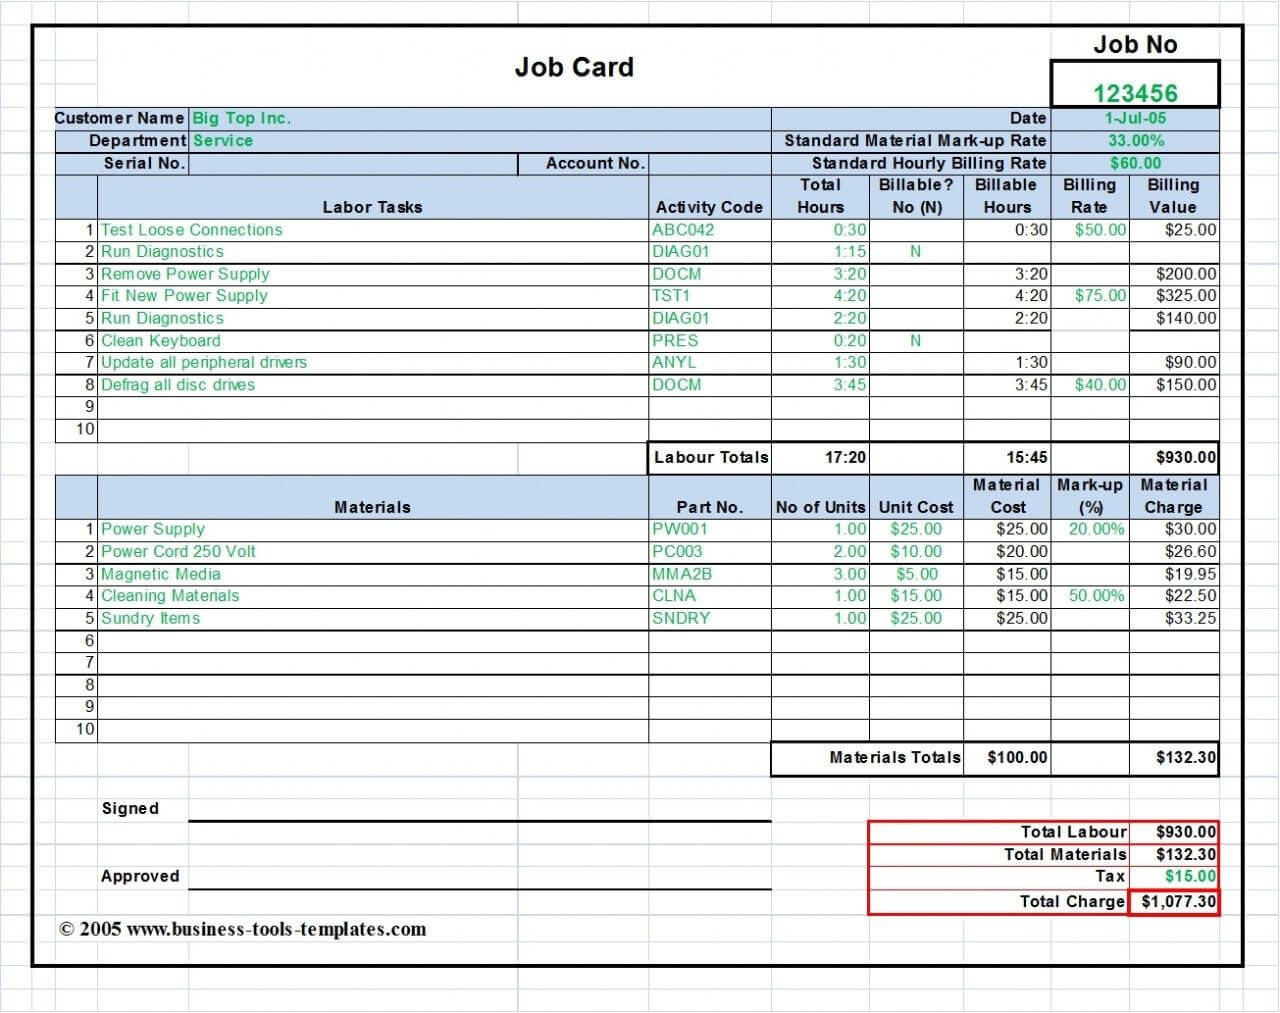 Workshop Job Card Template Excel, Labor & Material Cost Inside Job Card Template Mechanic